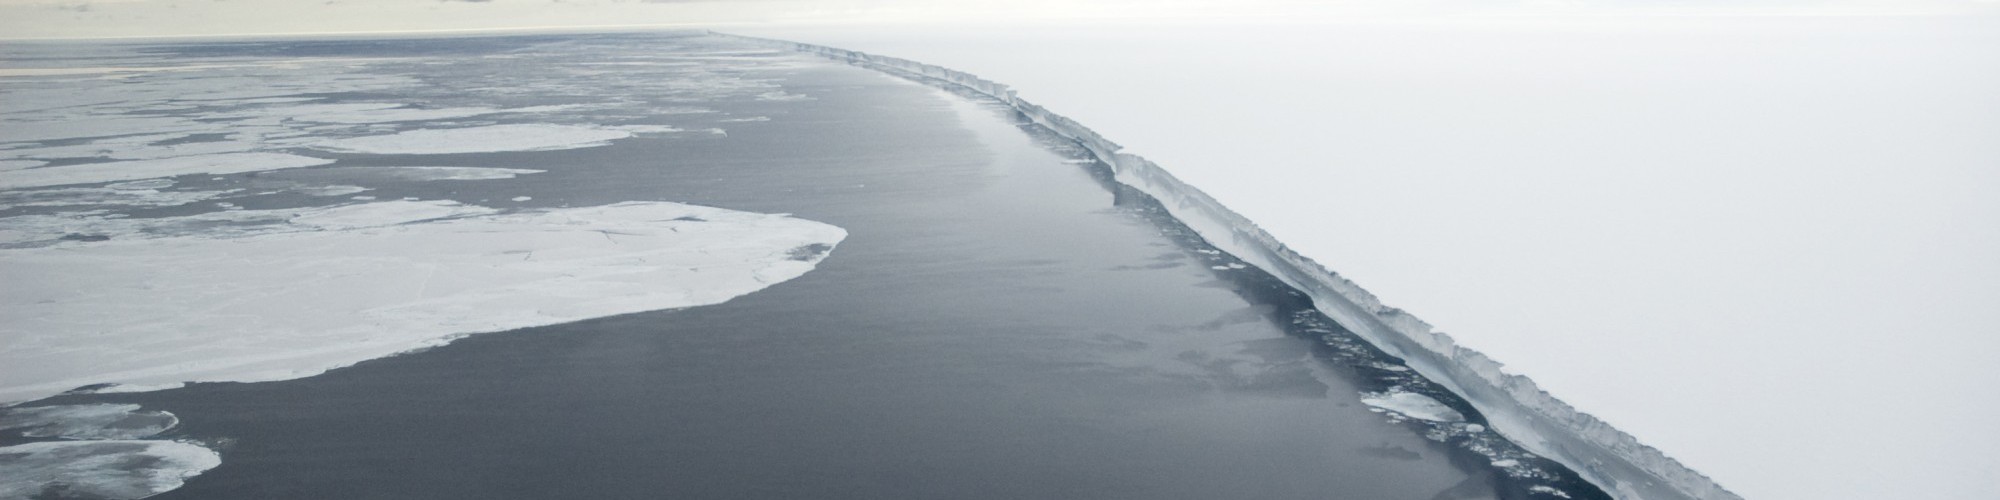 Antarctica - Ross Sea - Ortelius - Ross Ice Shelf length by Delphine Aurès